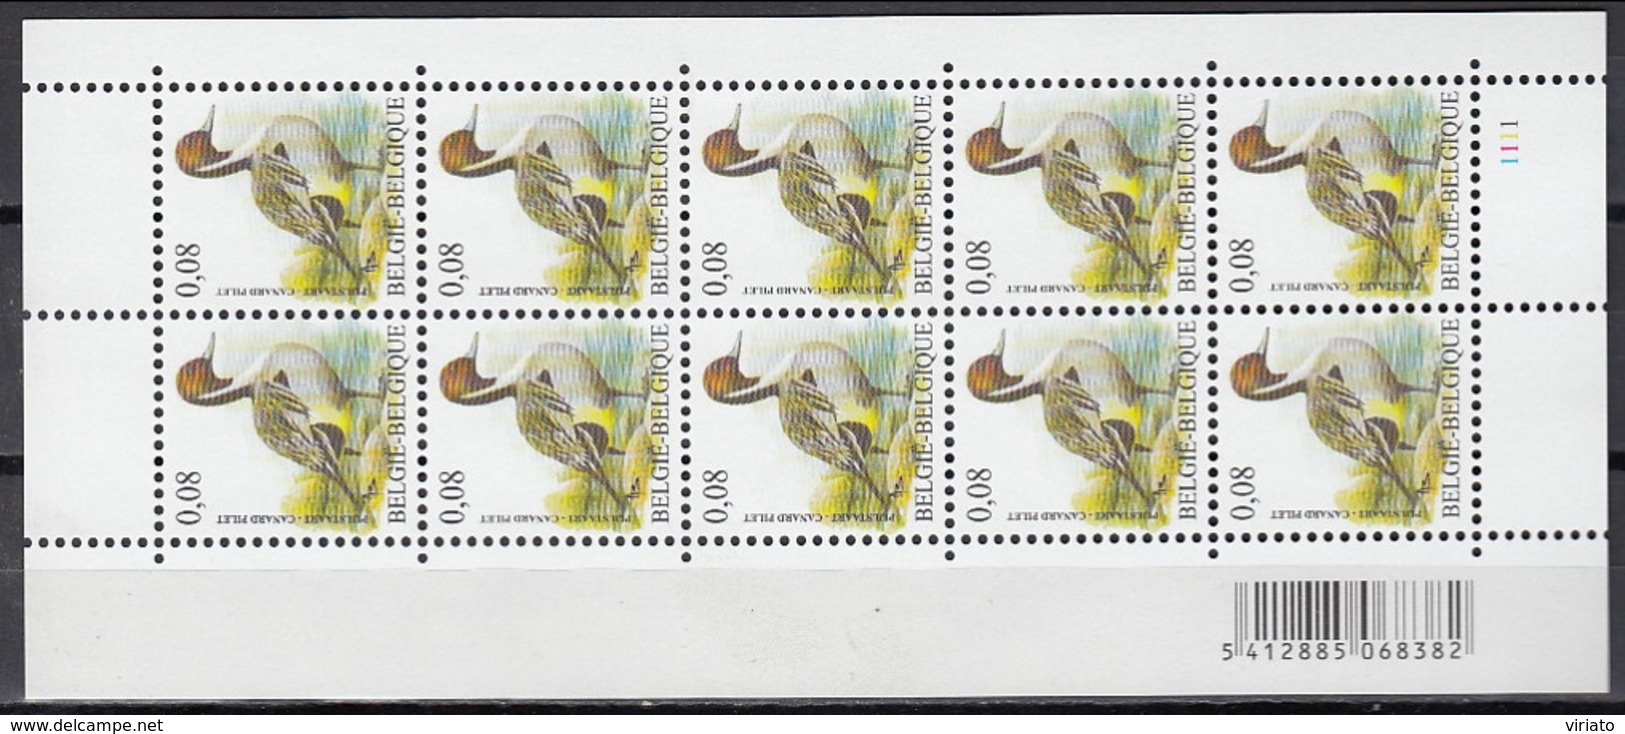 AB0063 - COB 4090 (P 1):  Canard Pilet / Pijlstaart - 1985-.. Birds (Buzin)